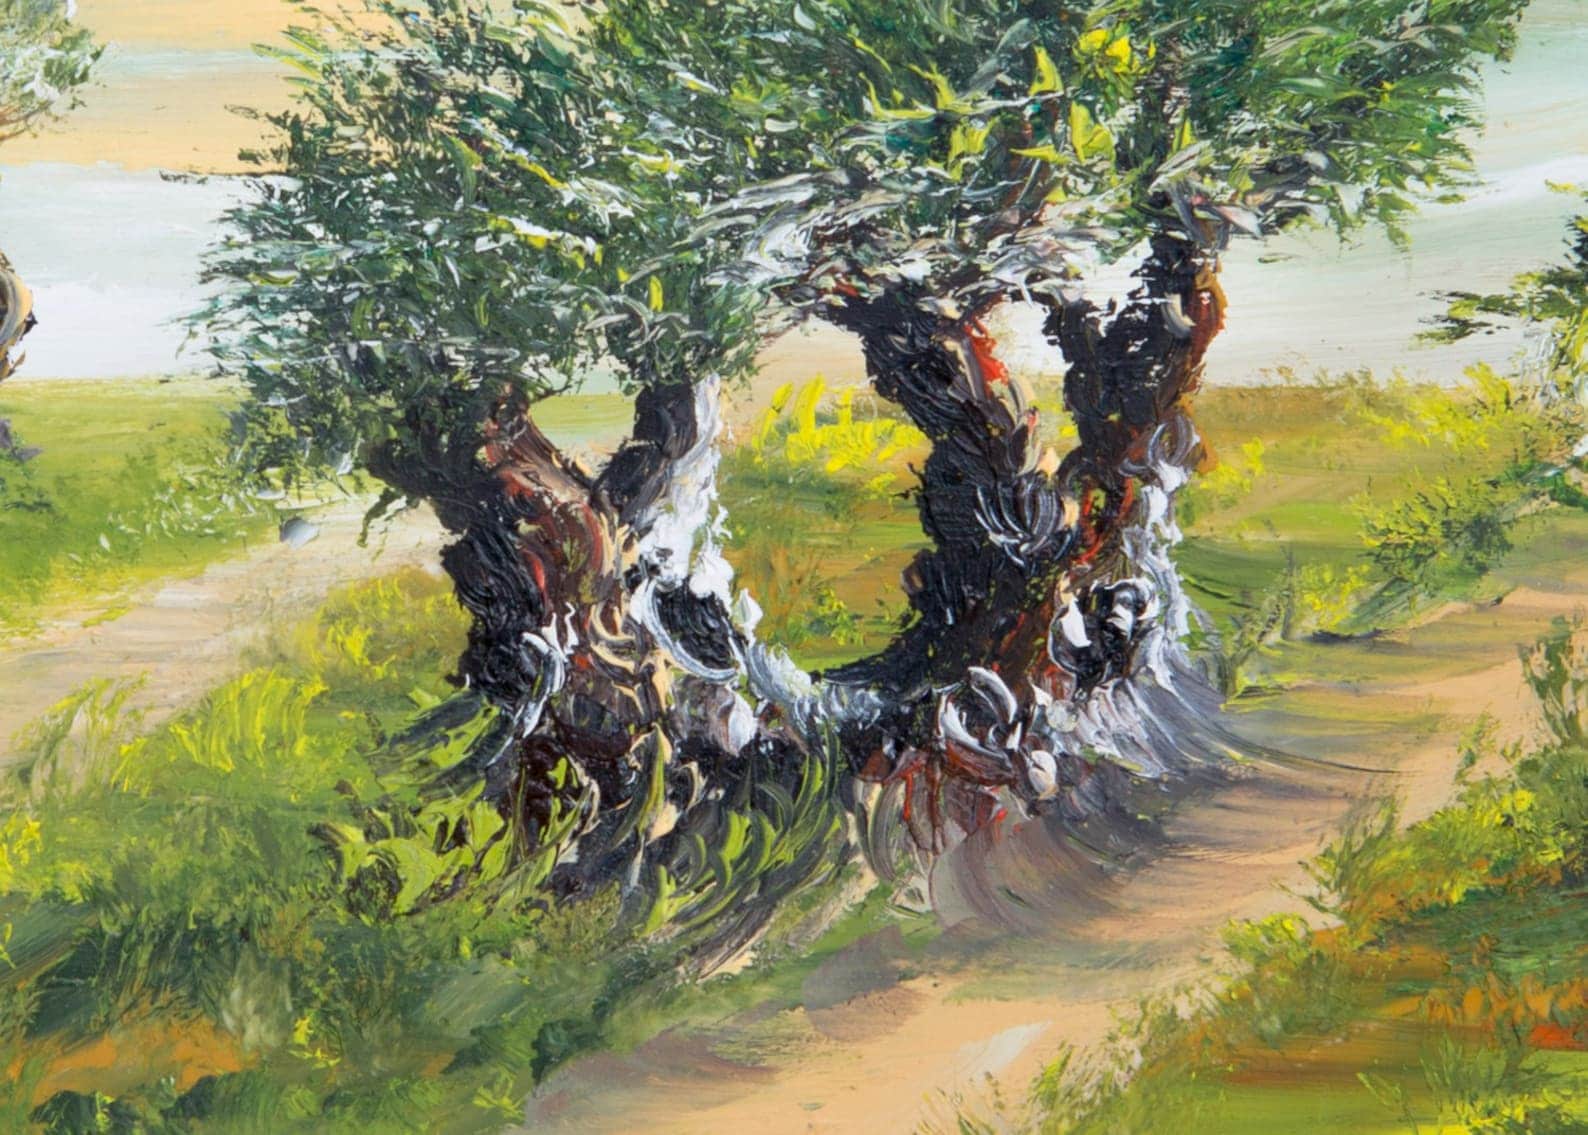 Oil Painting of Garden of Gethsemane